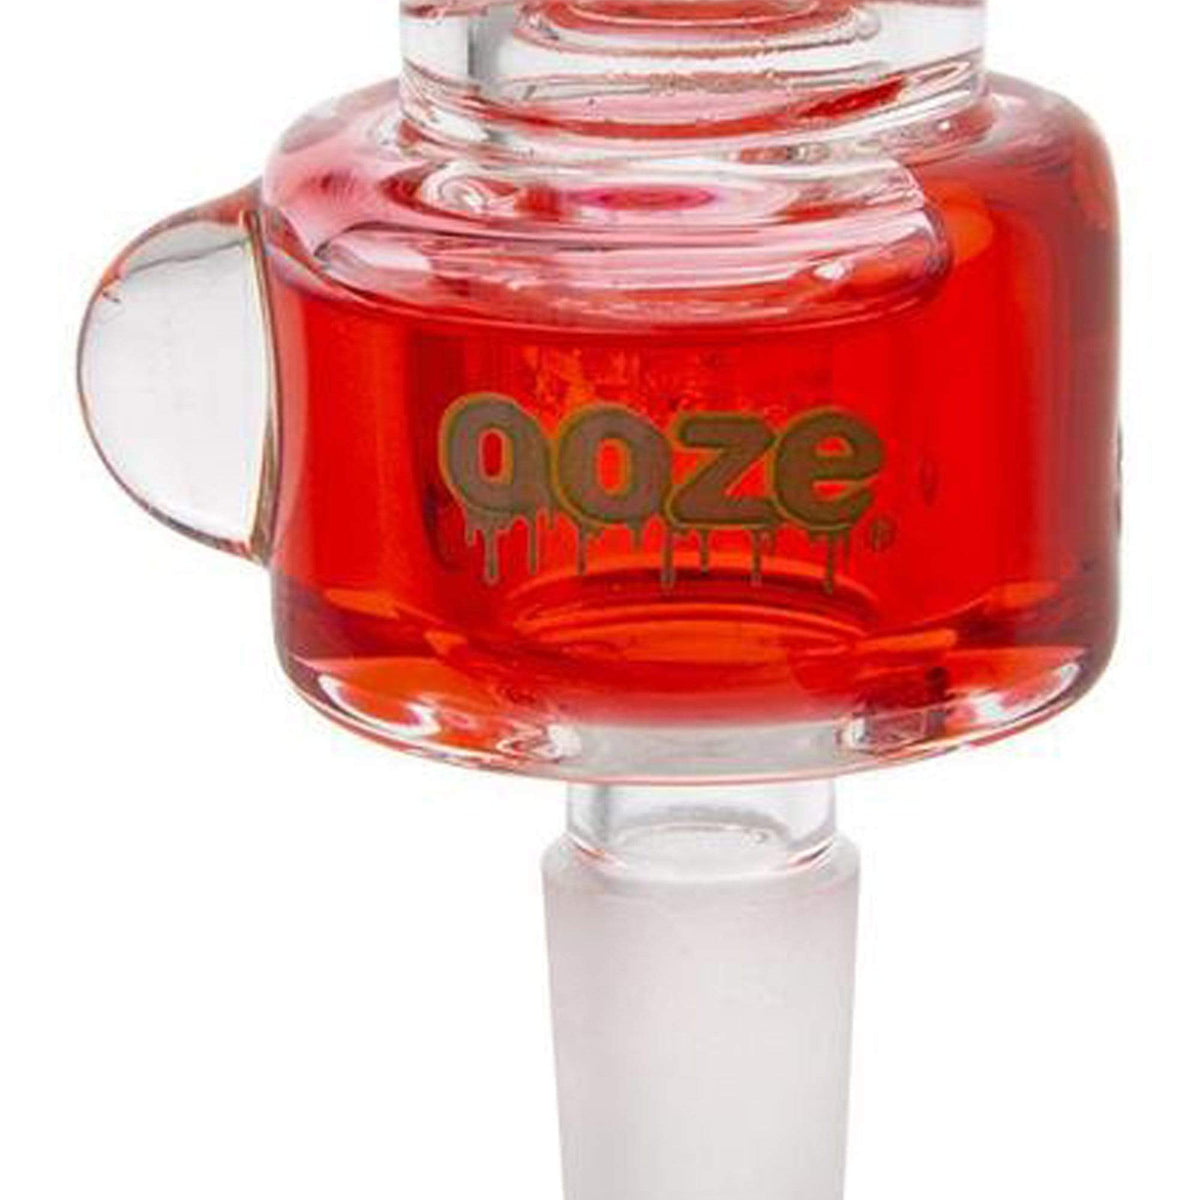 Ooze Glyco Freezeable Glass Bowl